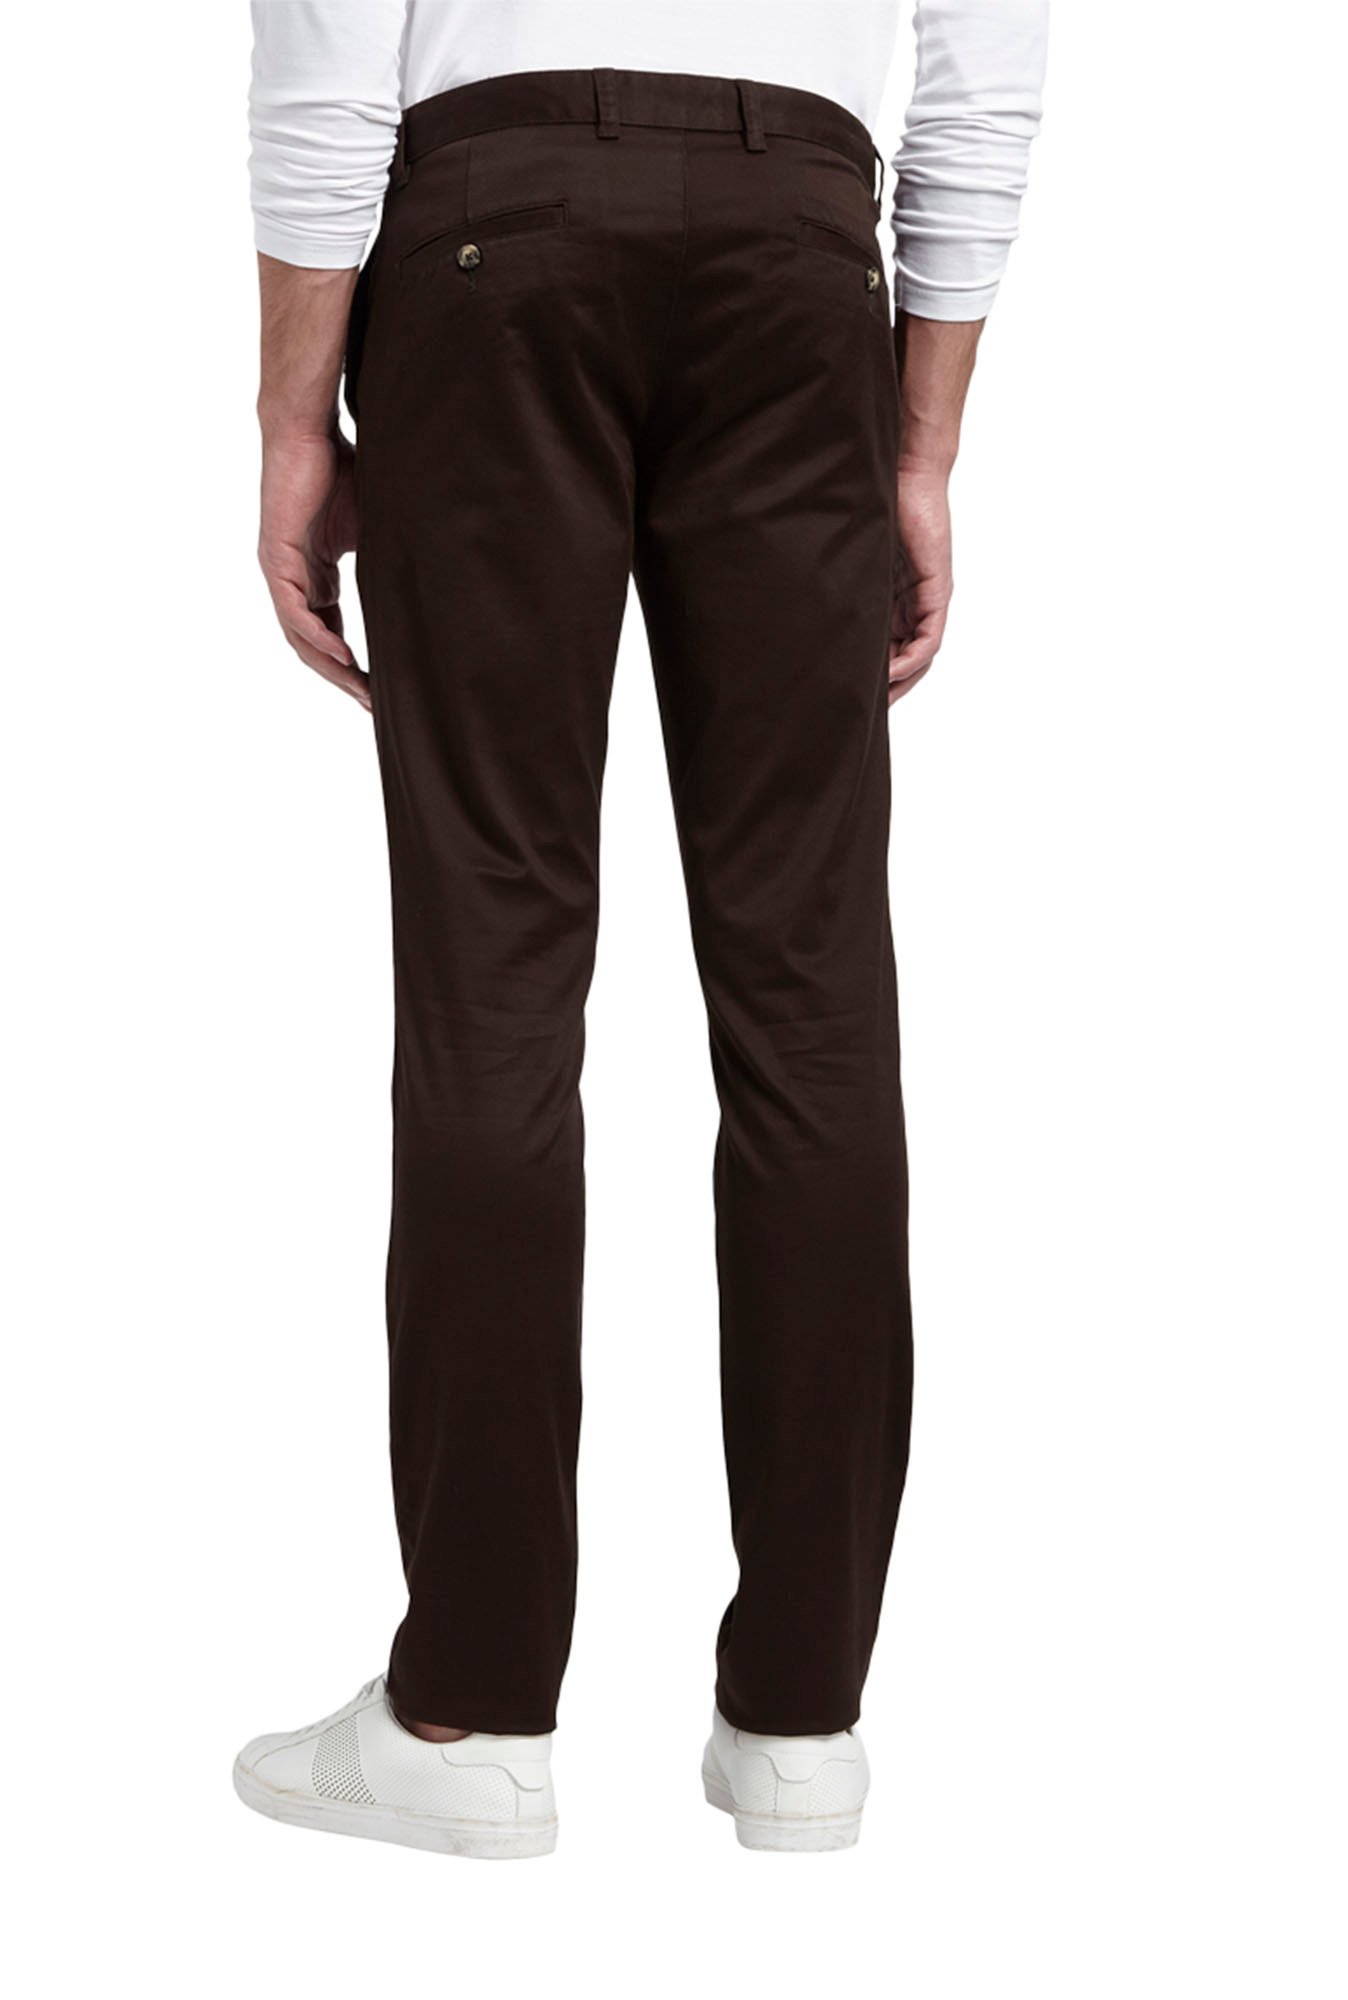 Buy ANNOY Men Regular Fit Formal Dark Brown TrousersANYFP0228 at  Amazonin